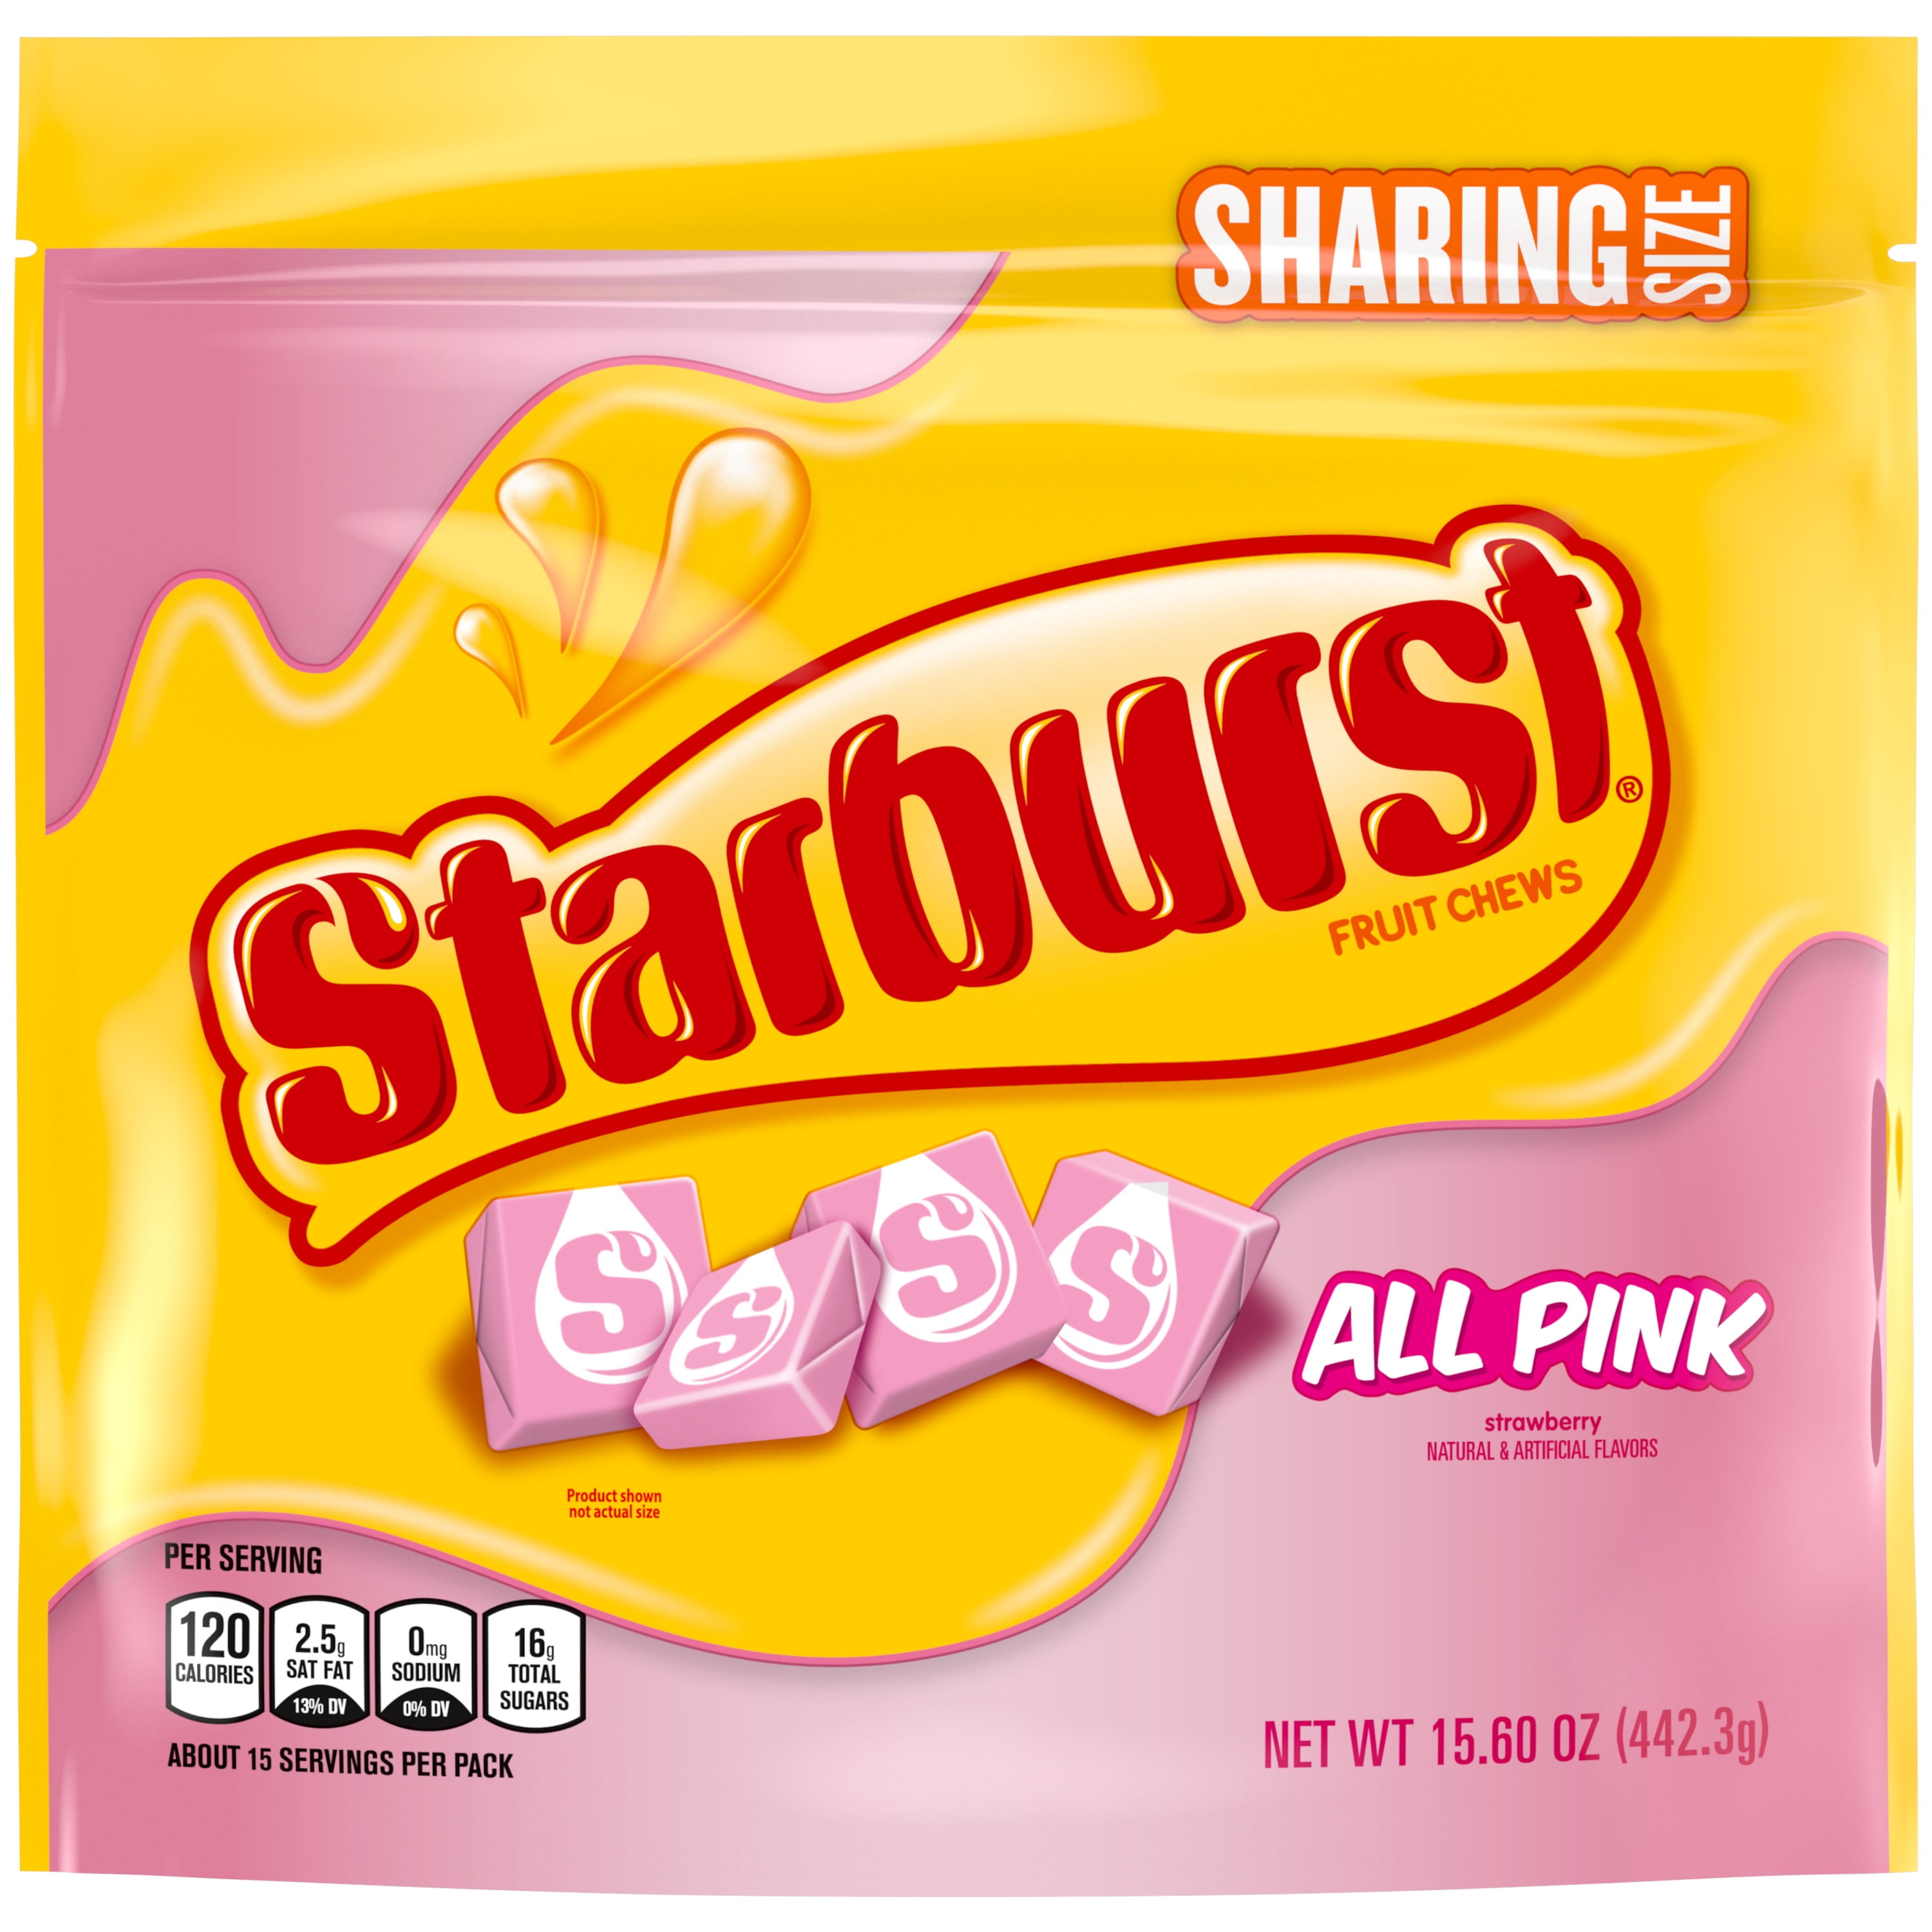 Starburst All Pink Fruit Chews Gummy Candy, Sharing Size - 15.6 oz Bag